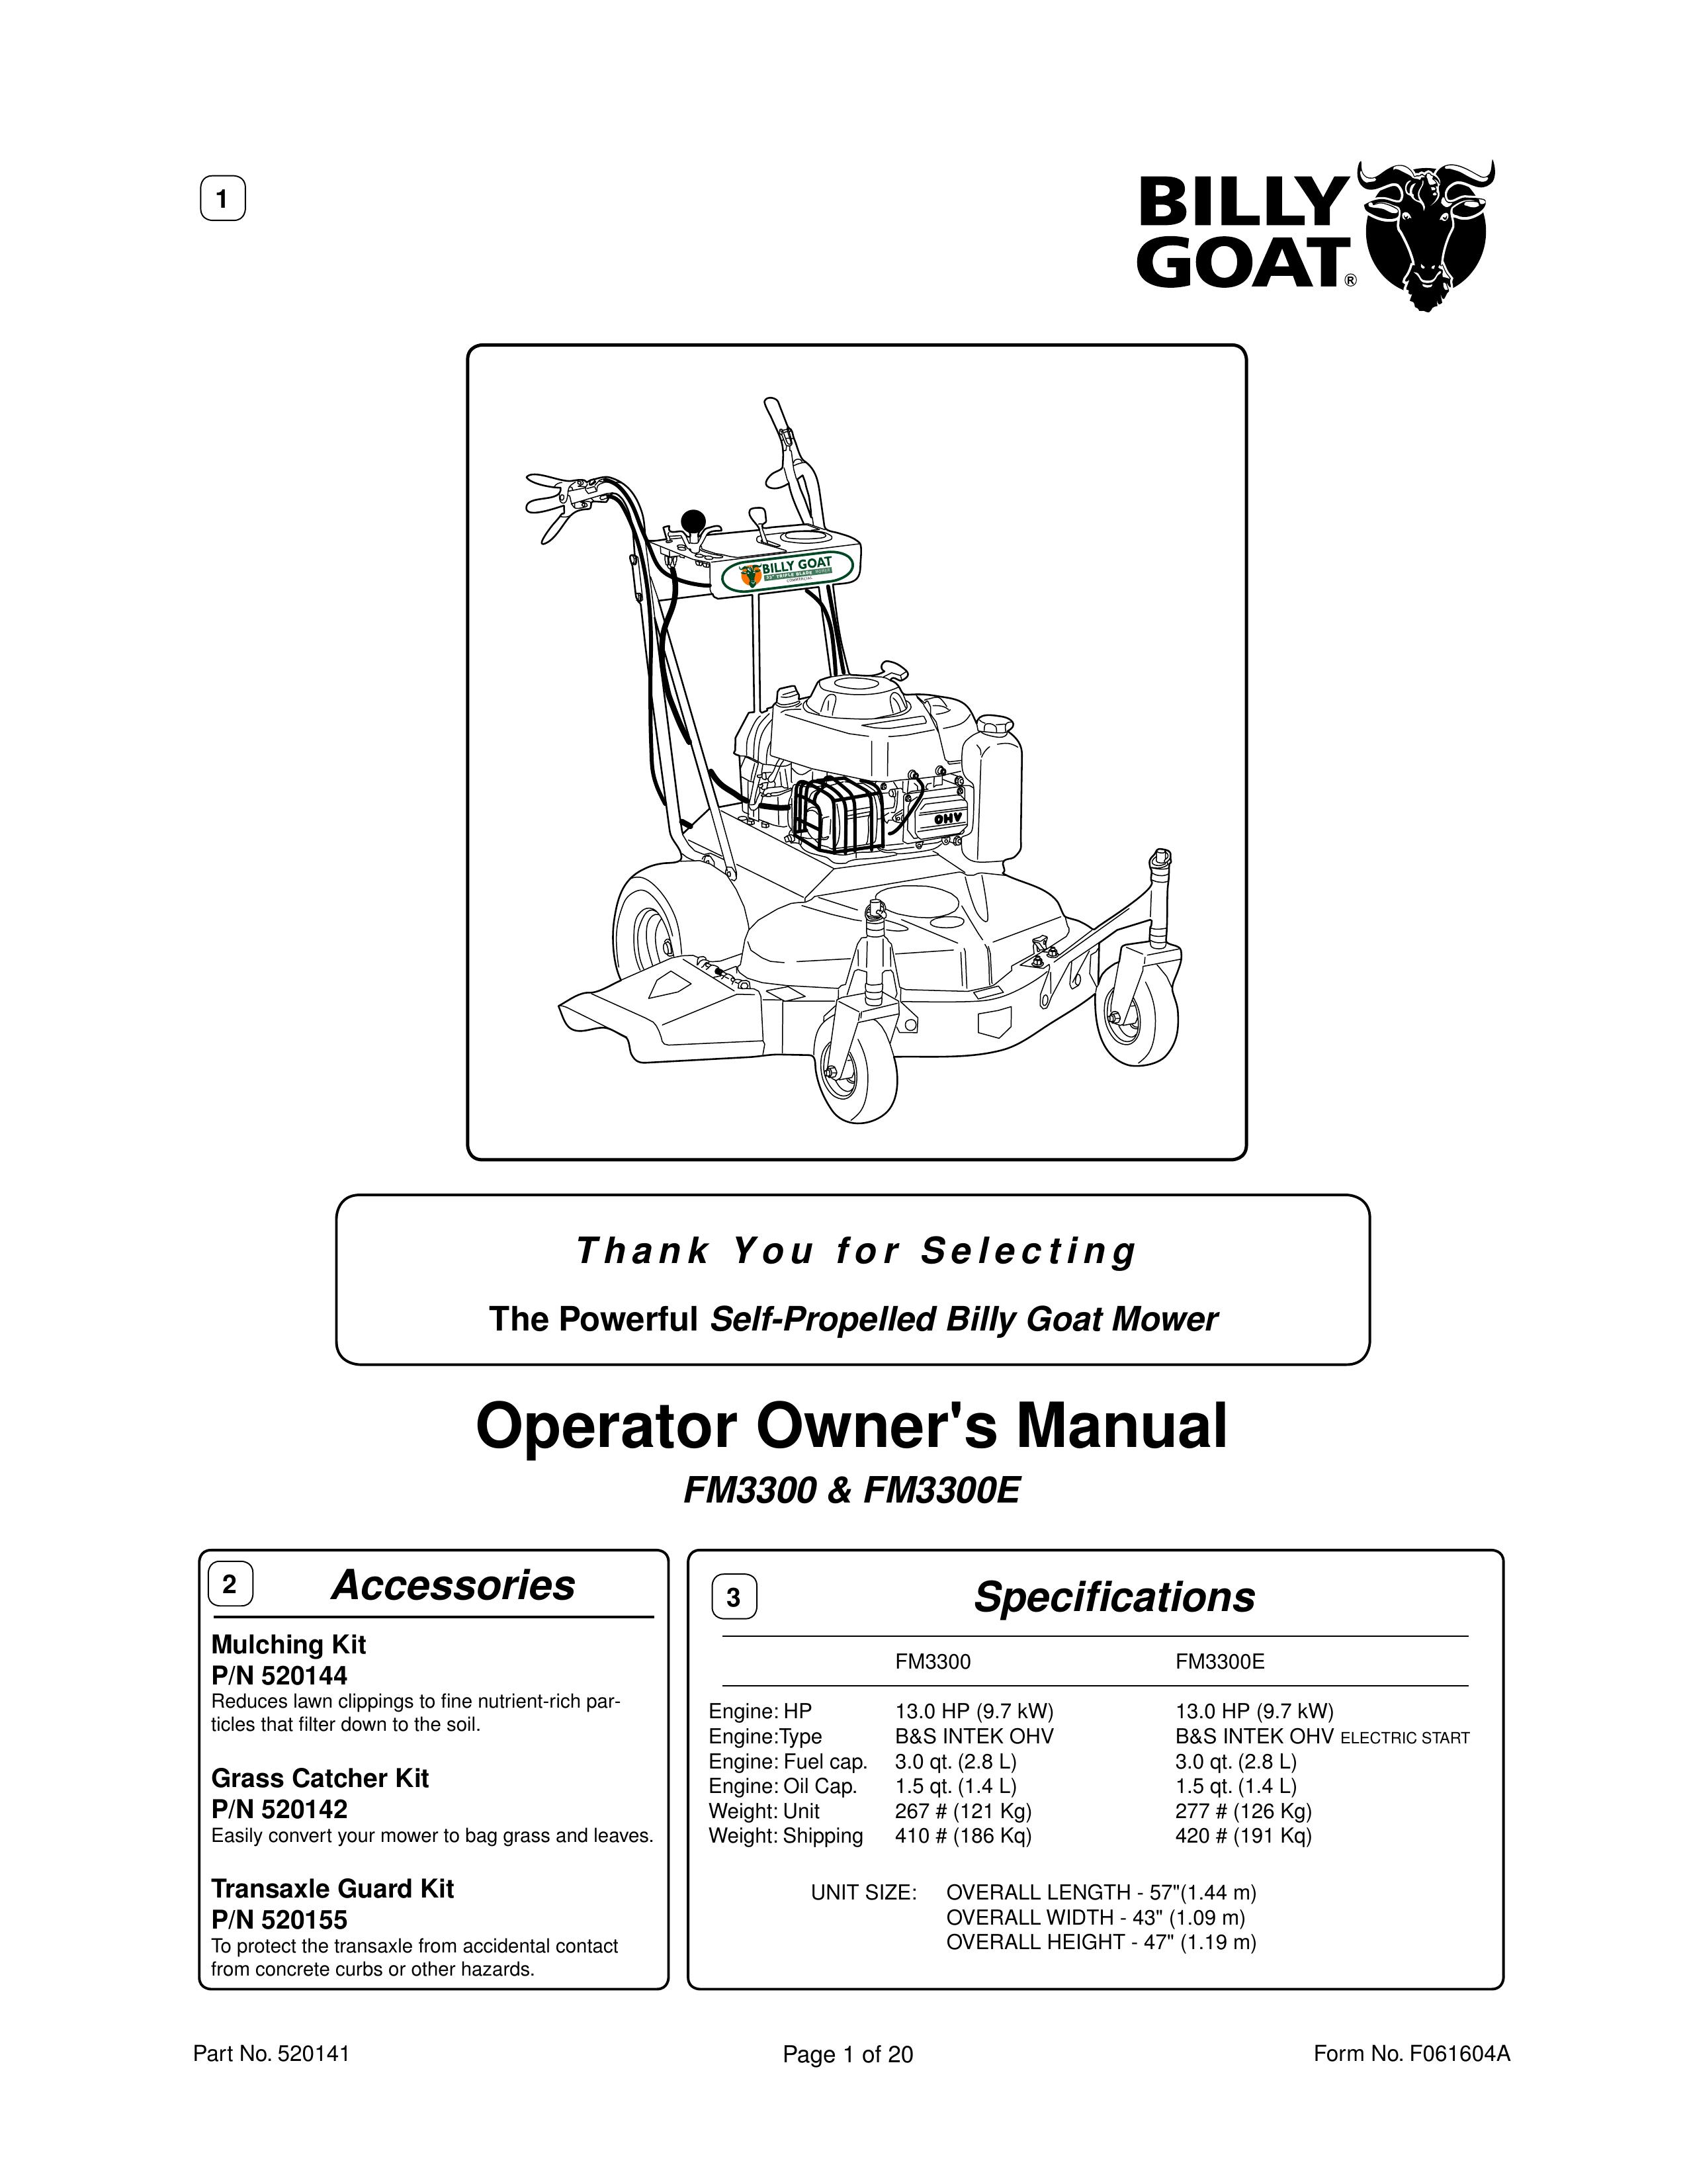 Billy Goat FM3300E Lawn Mower User Manual